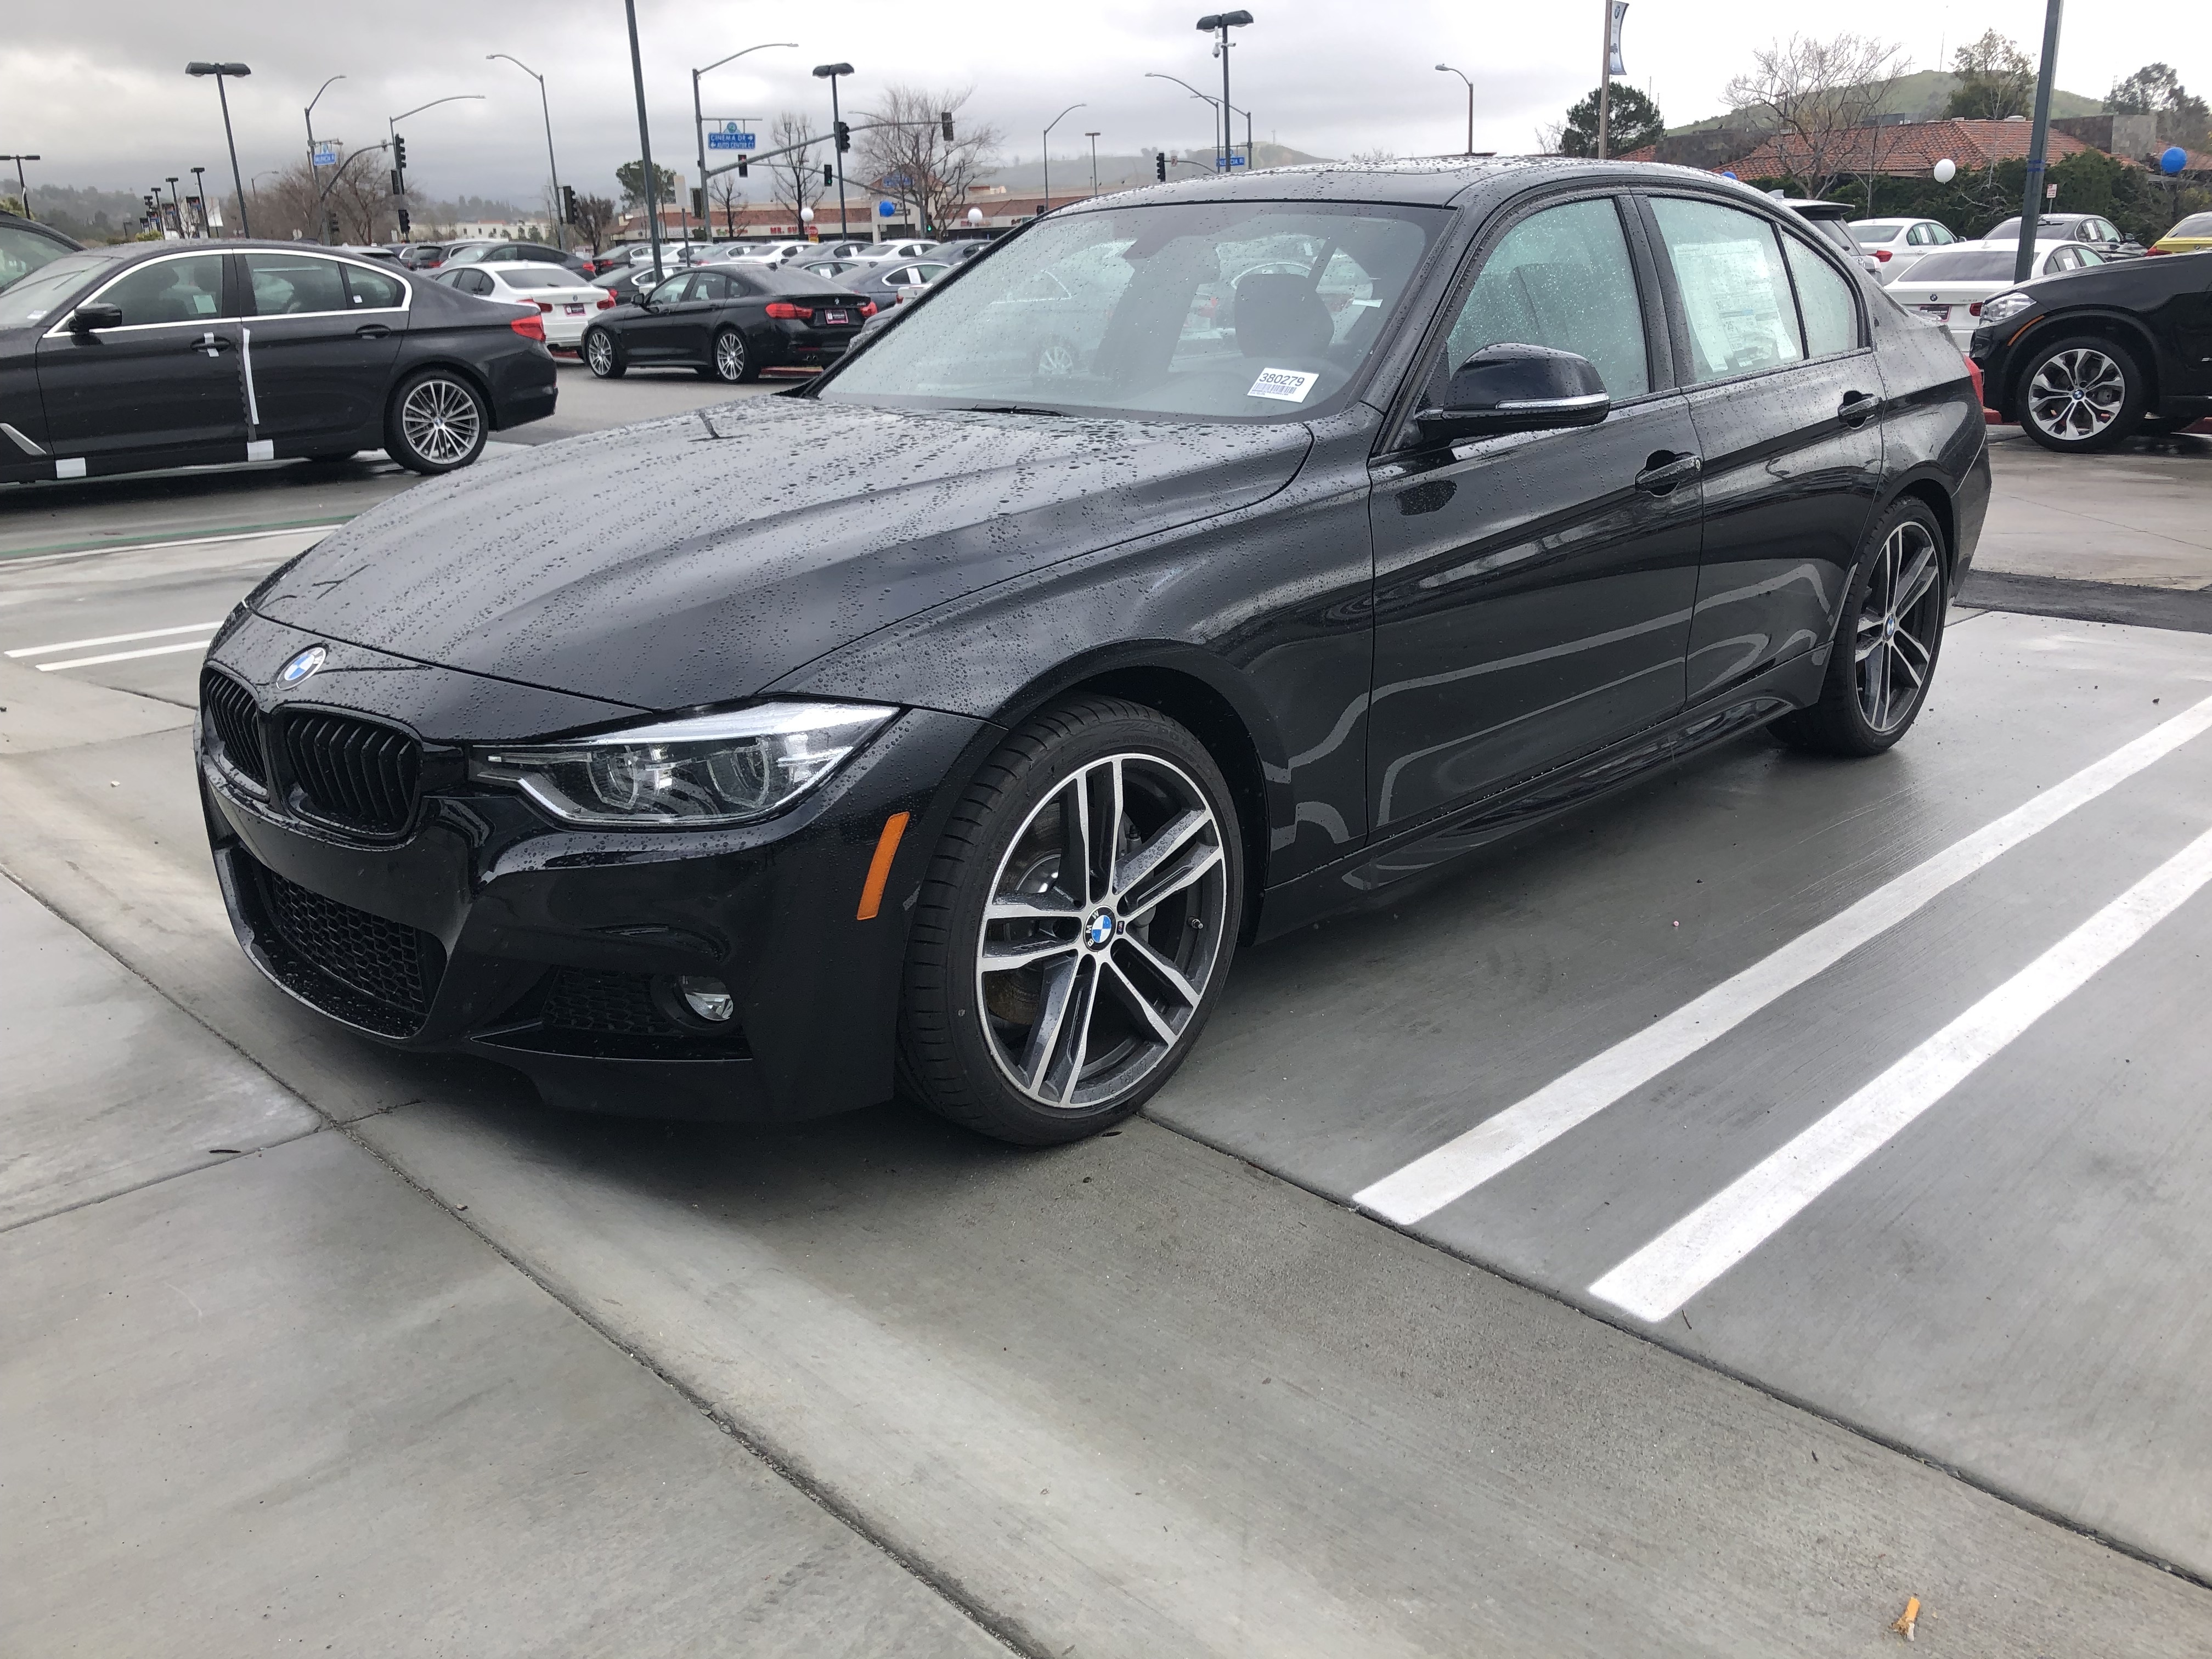 SIGNED 2018 BMW 340i M SPORT $492/MO - Share Deals & Tips - FORUM |  LEASEHACKR